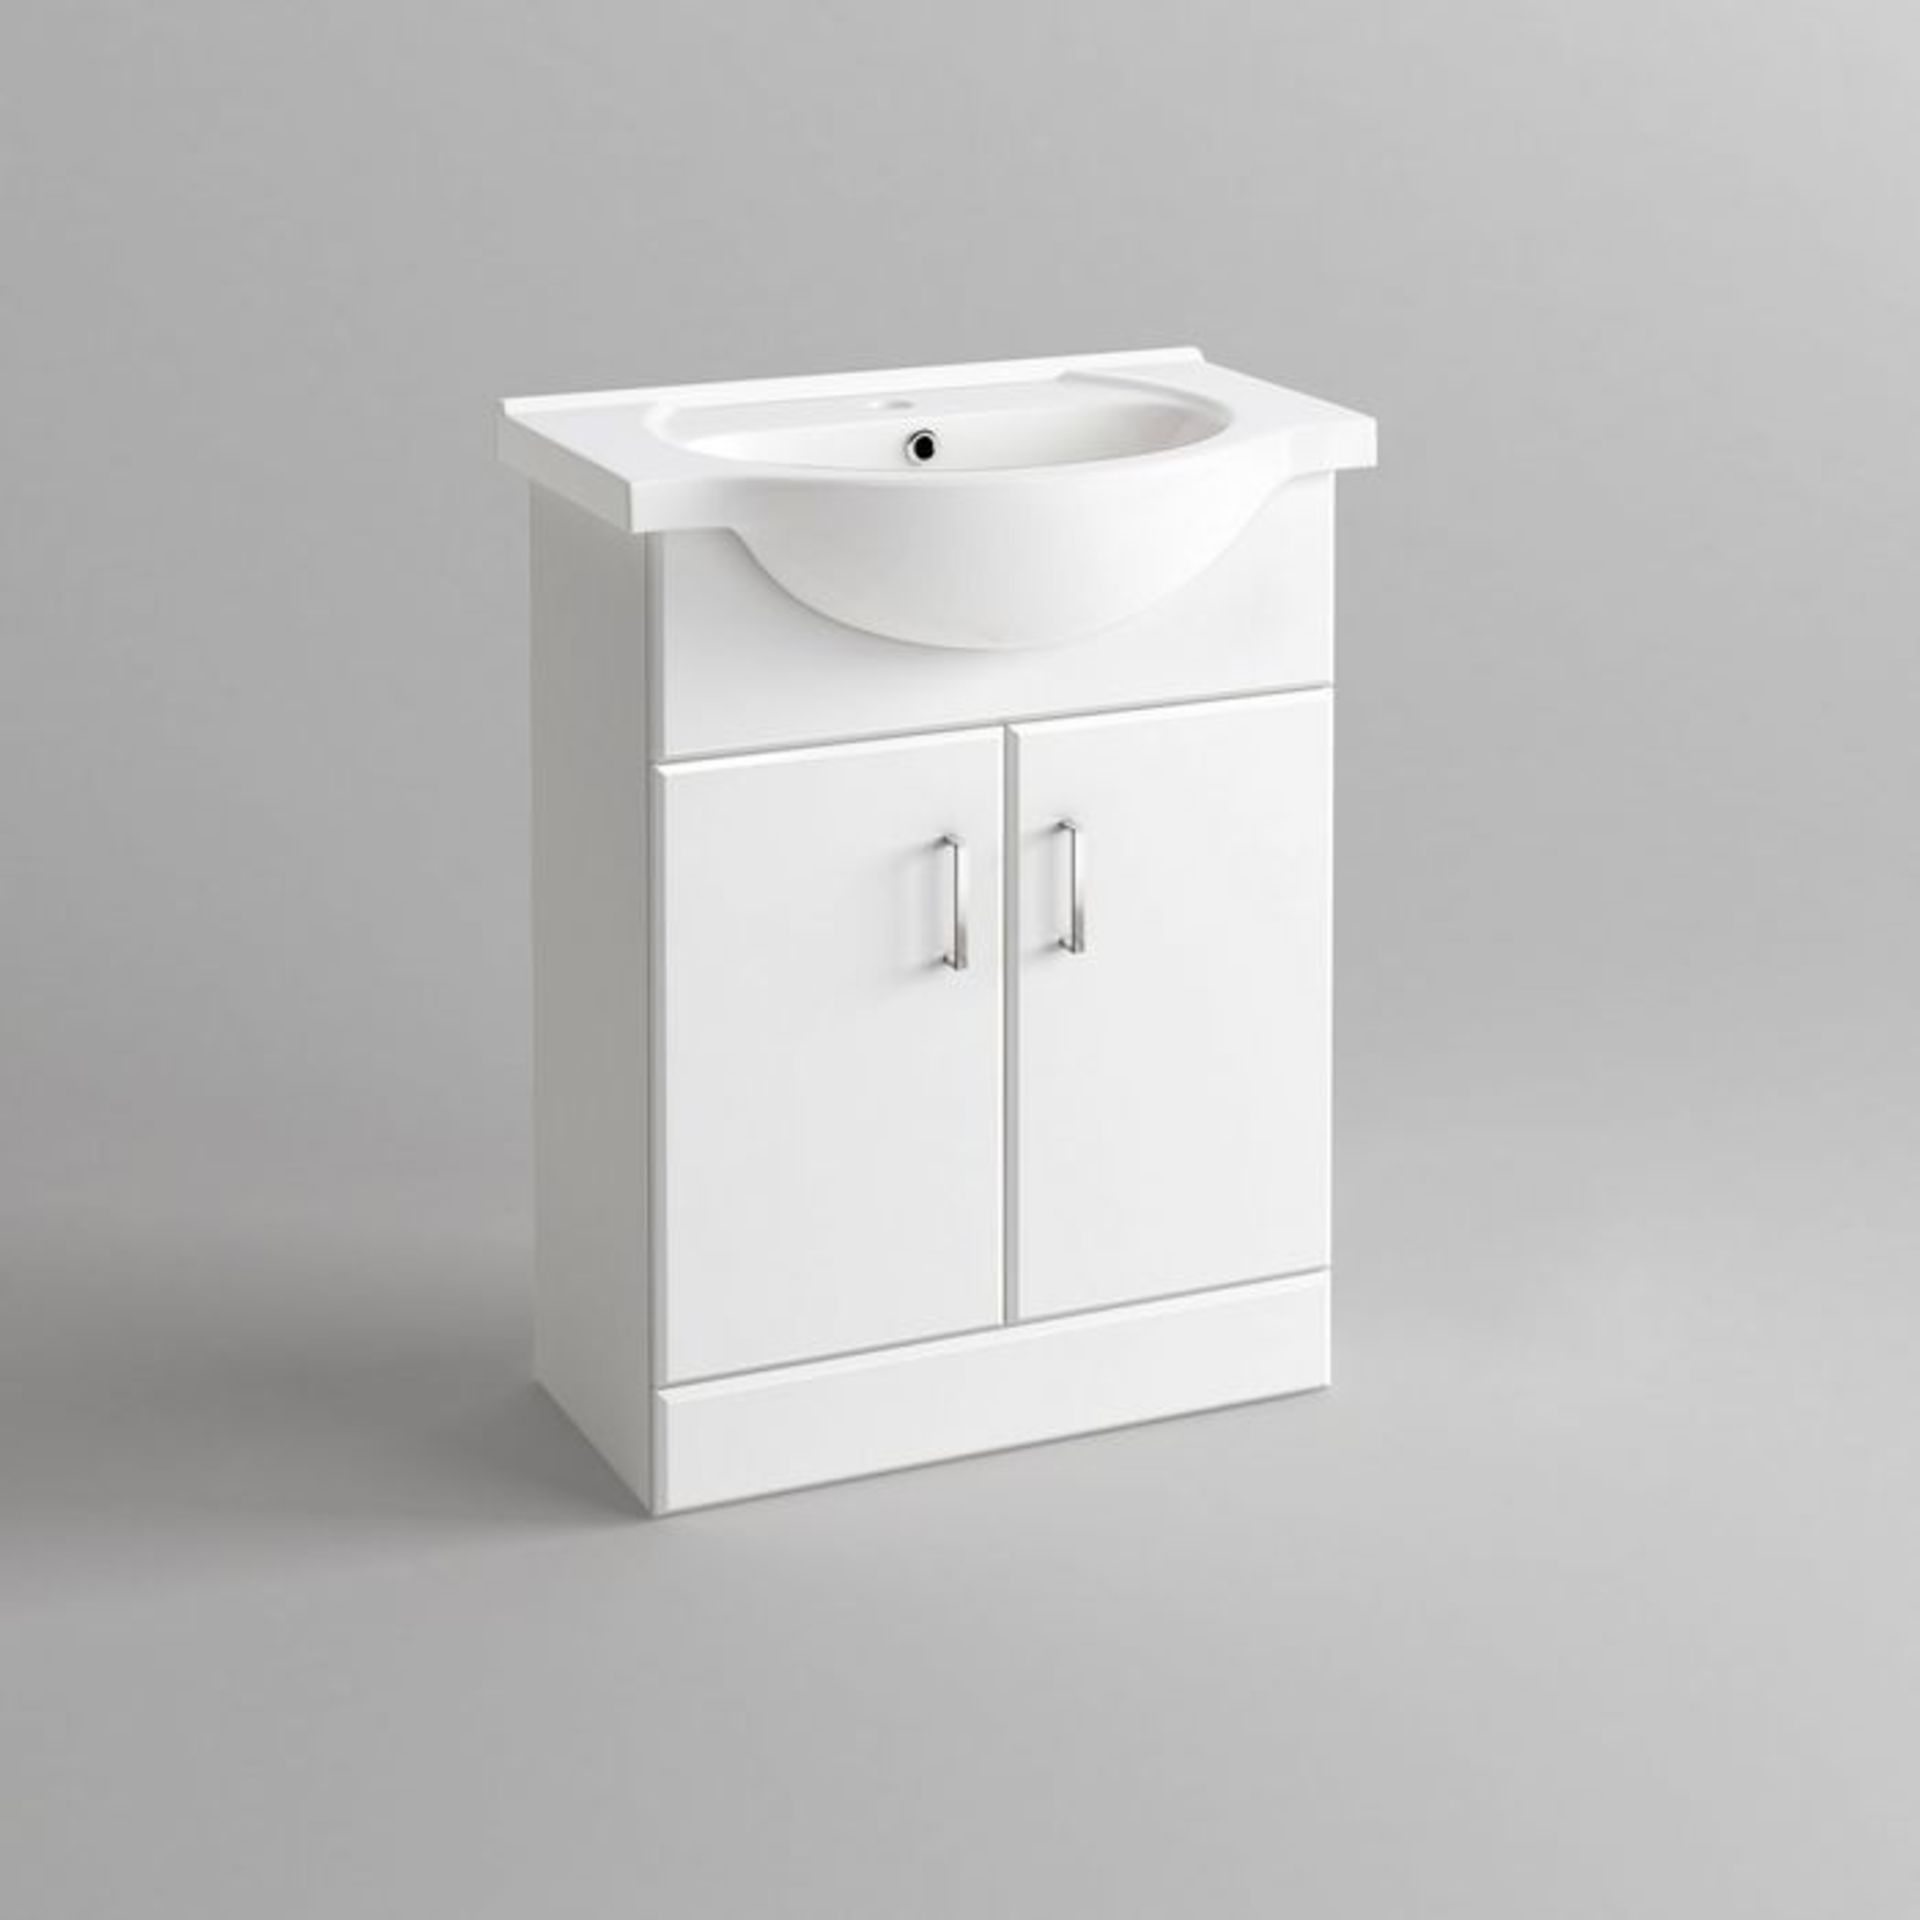 (AL44) 550x300mm Quartz Gloss White Built In Basin Cabinet. Comes complete with basin. Pristine - Image 5 of 5